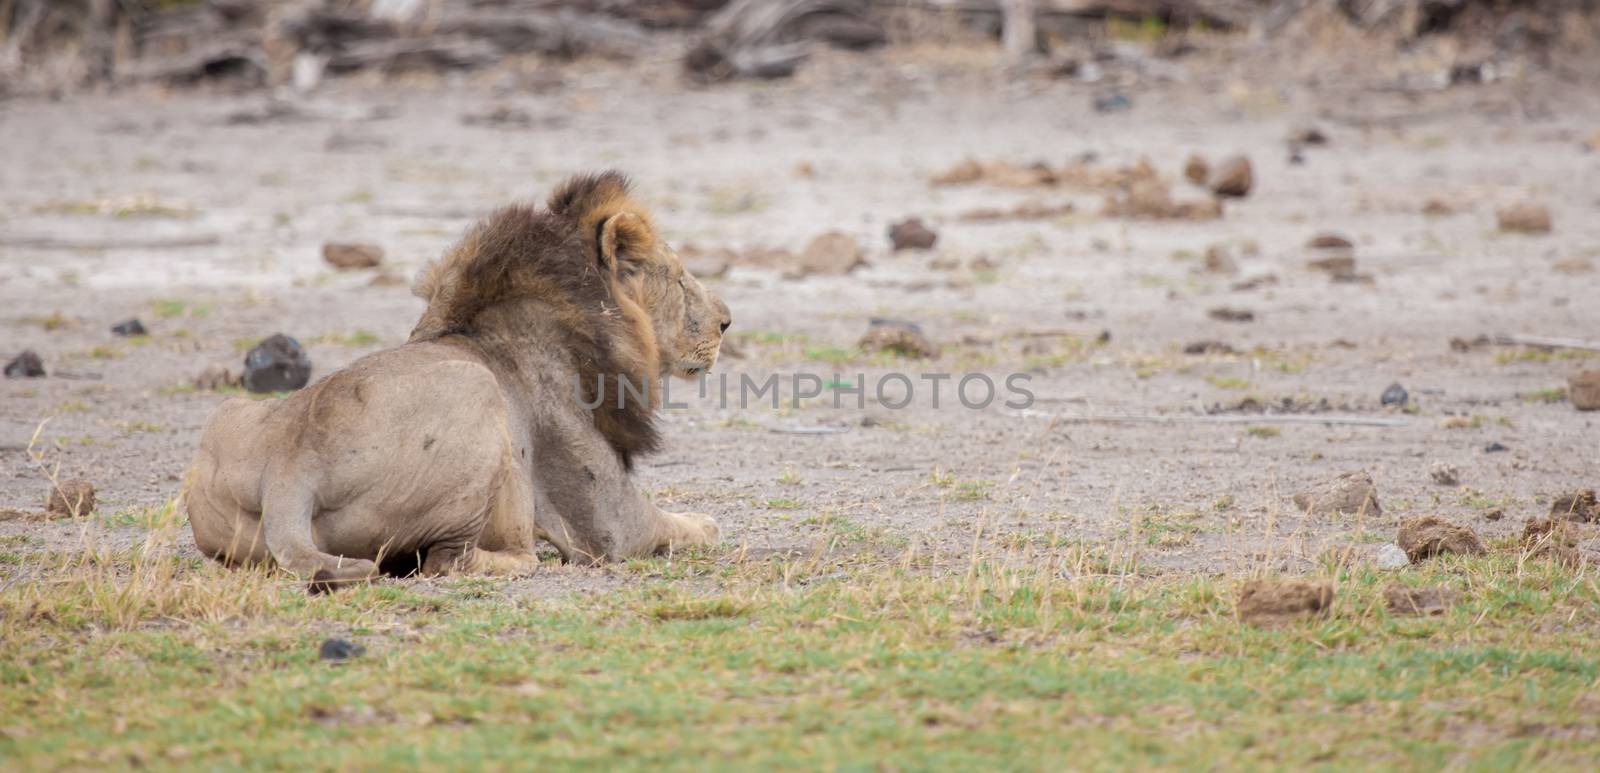 A male lion is resting, savannah of Kenya by 25ehaag6